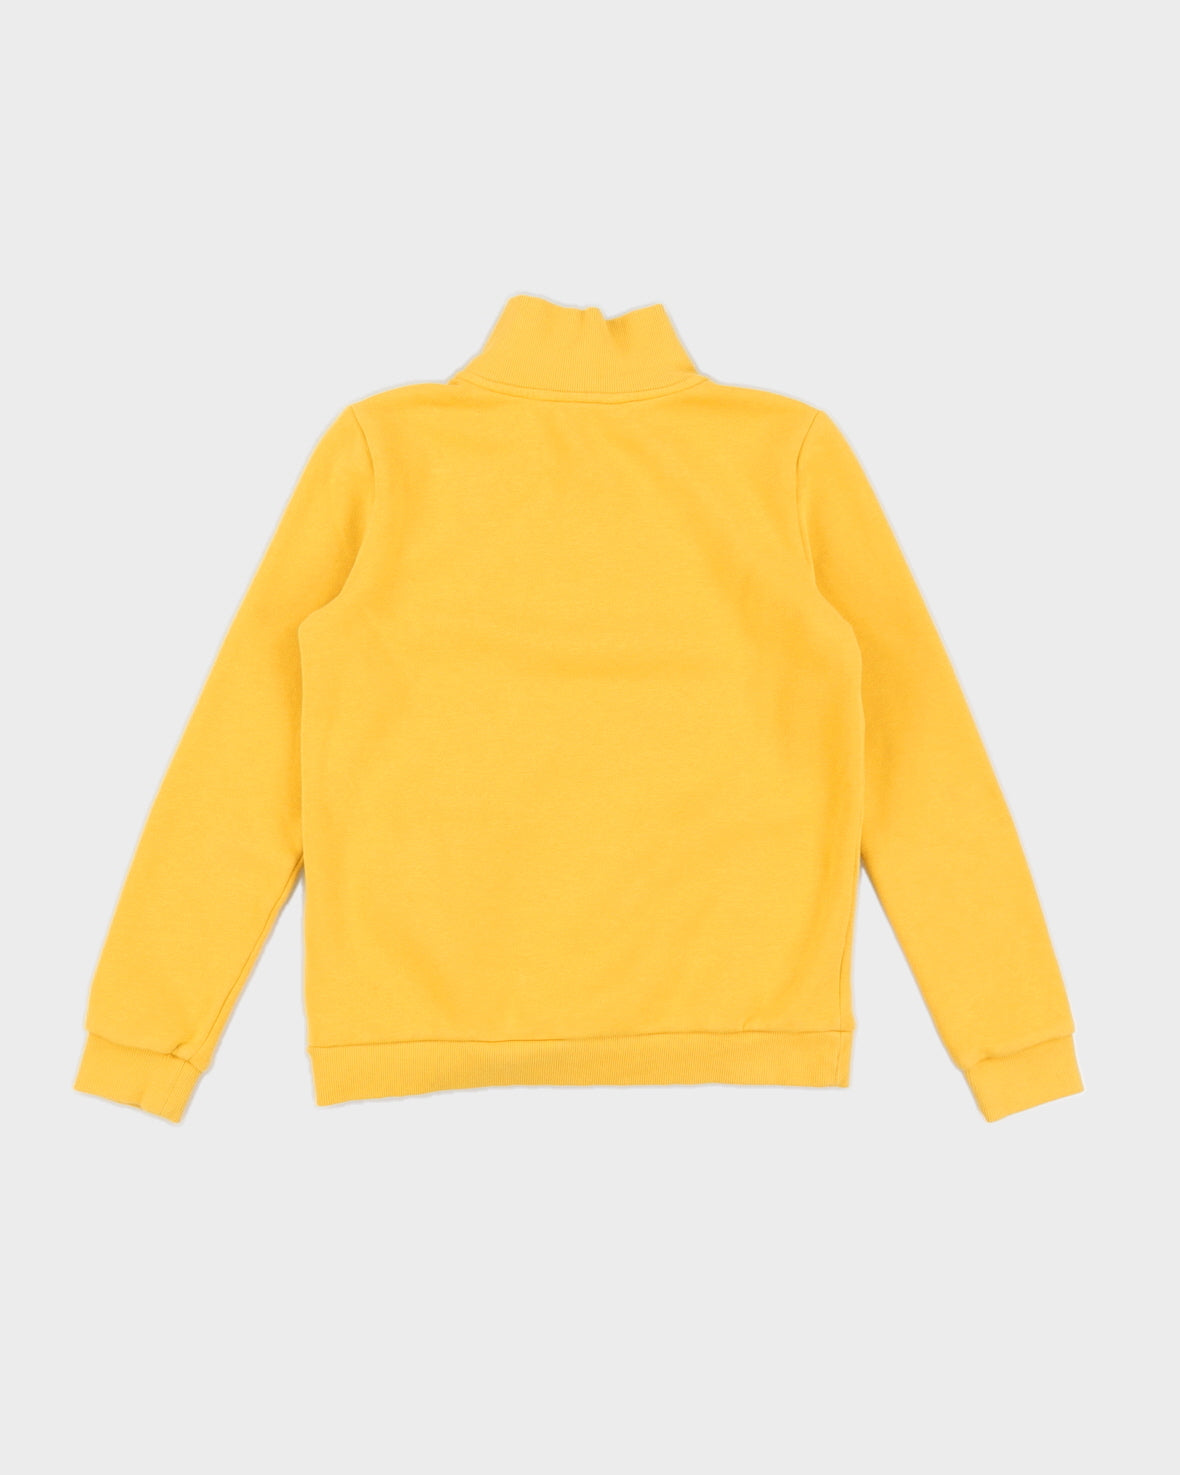 Tommy Hilfiger Yellow Quarter Zip Sweatshirt - XS